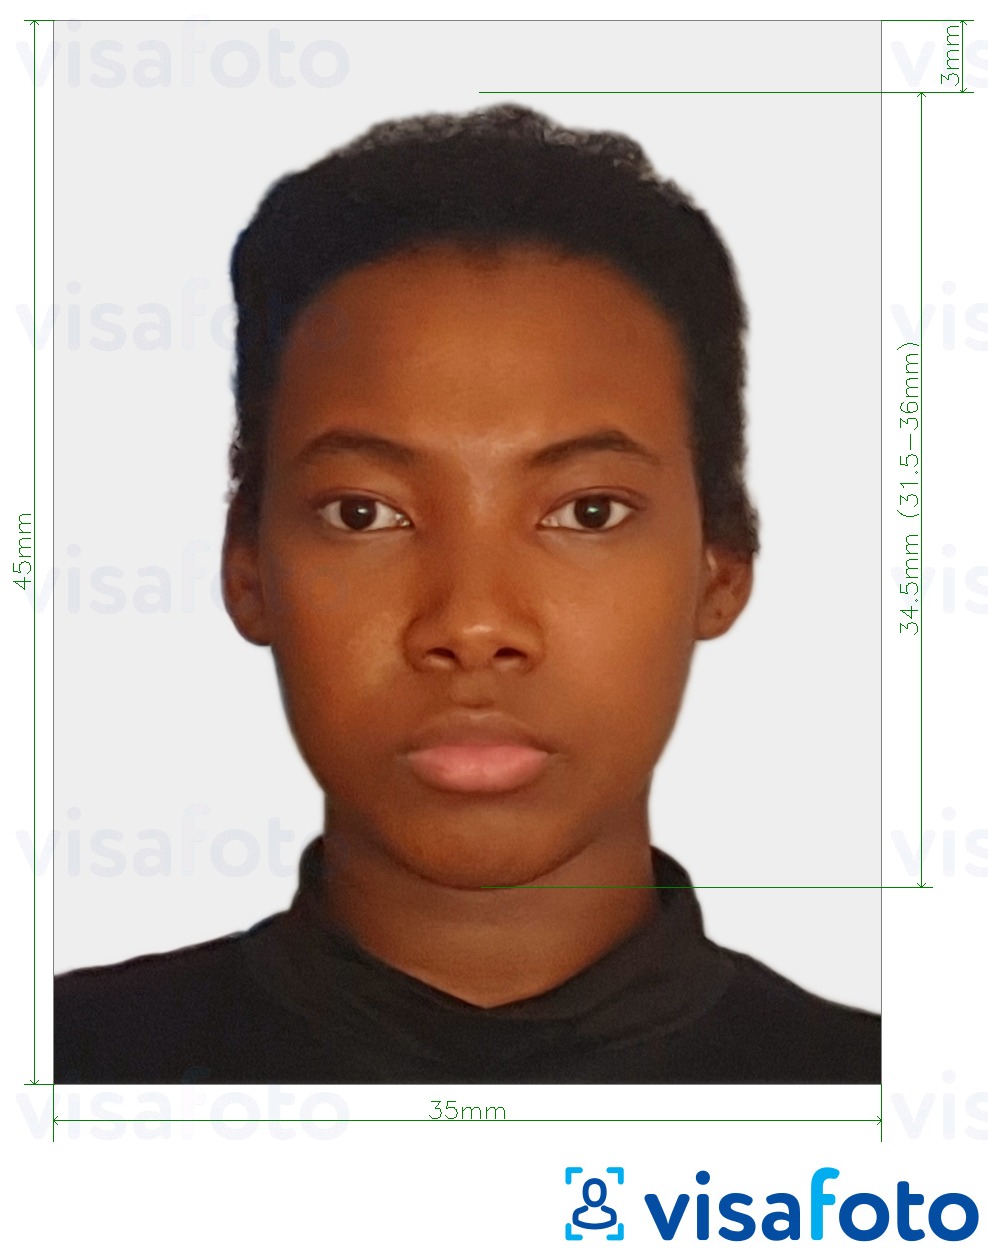 Contoh foto untuk Congo (Brazzaville) pasport 35x45 mm (3.5x4.5 cm) dengan spesifikasi saiz yang tepat.